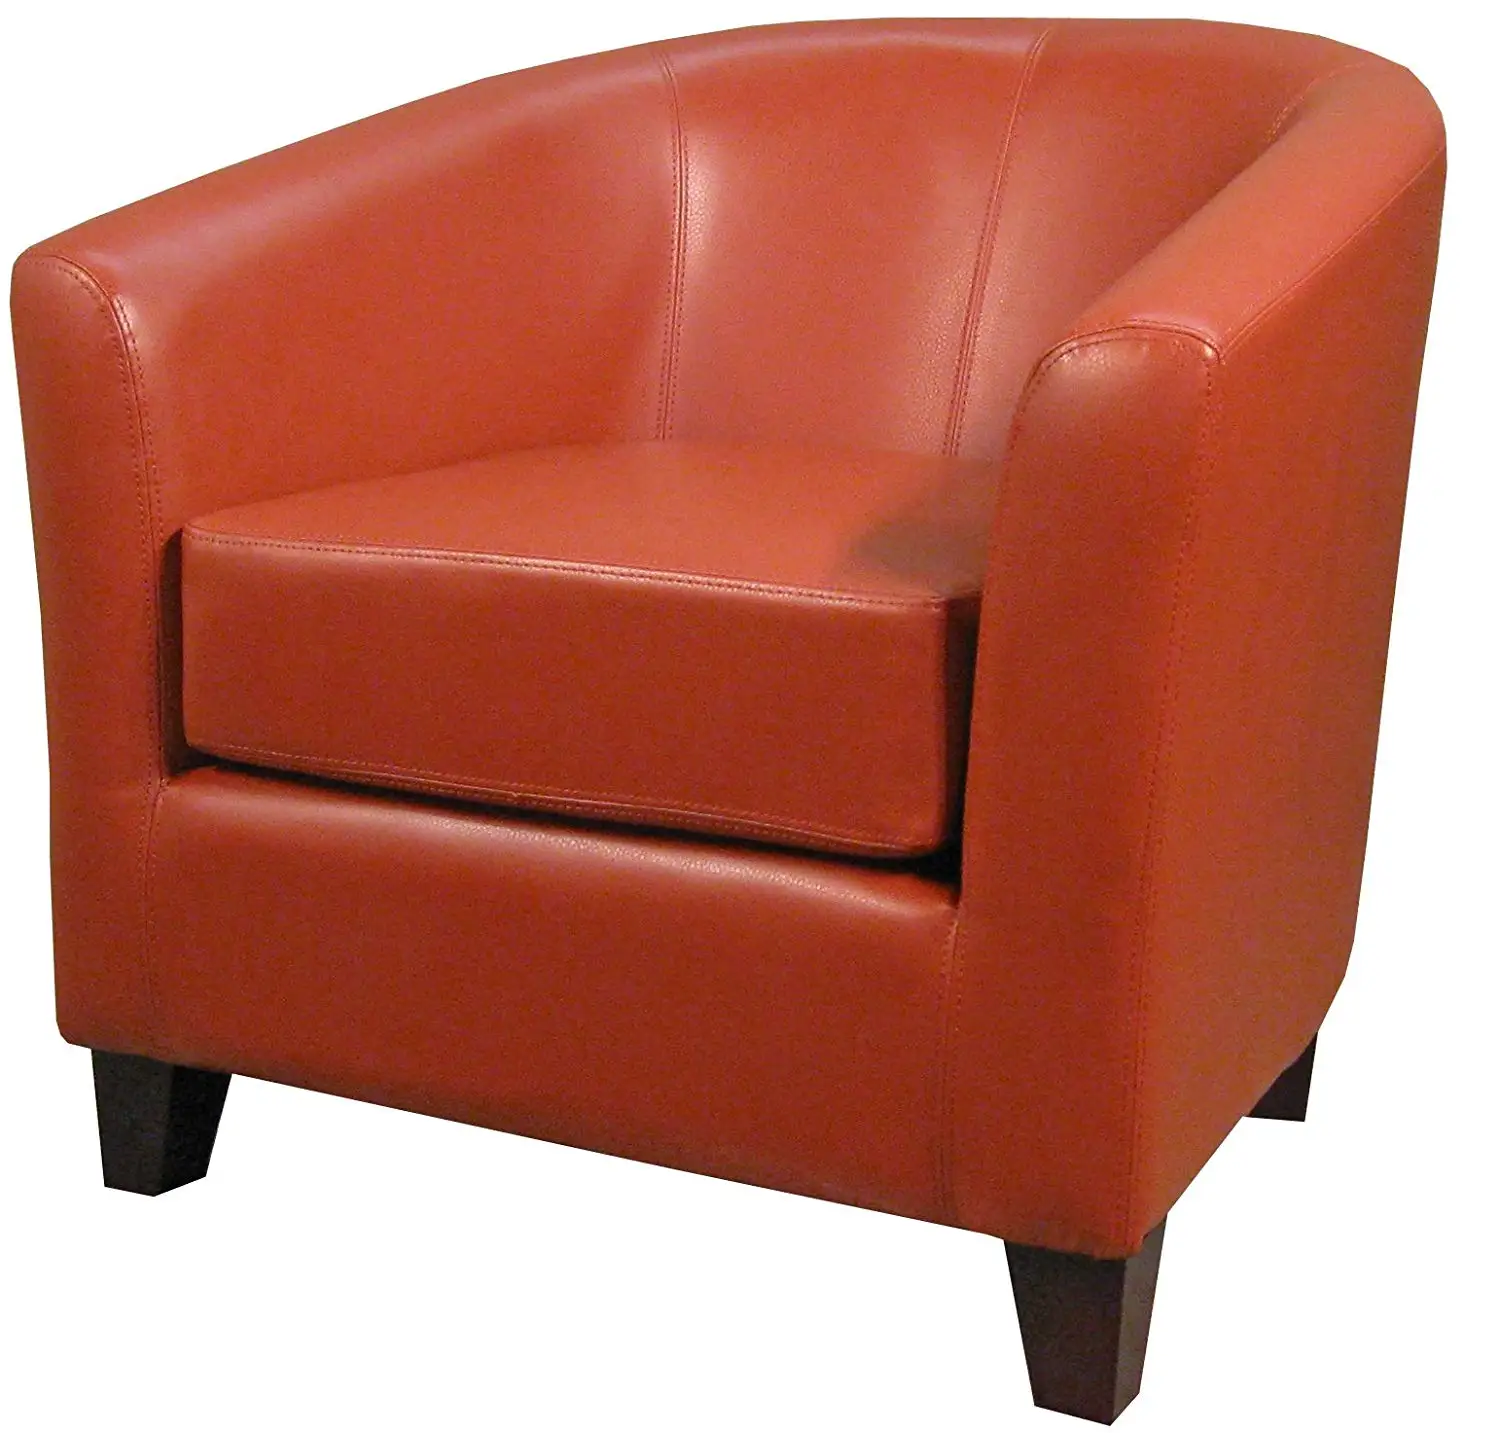 Cheap Orange Leather Club Chair, find Orange Leather Club Chair deals ...